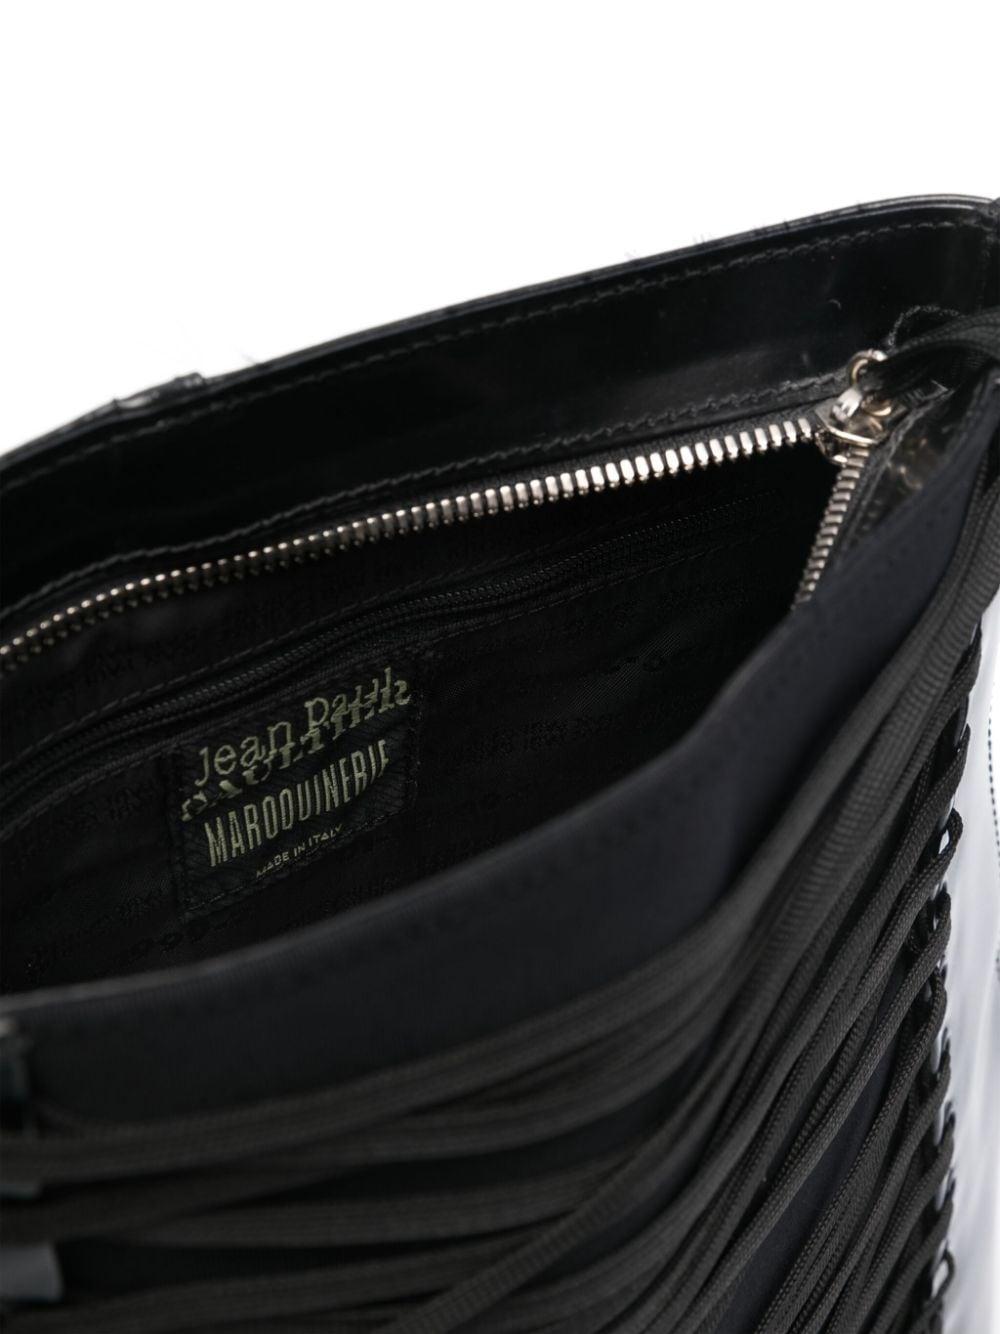 Jean Paul Gaultier Black Corset Leather Shoulder Bag For Sale 1